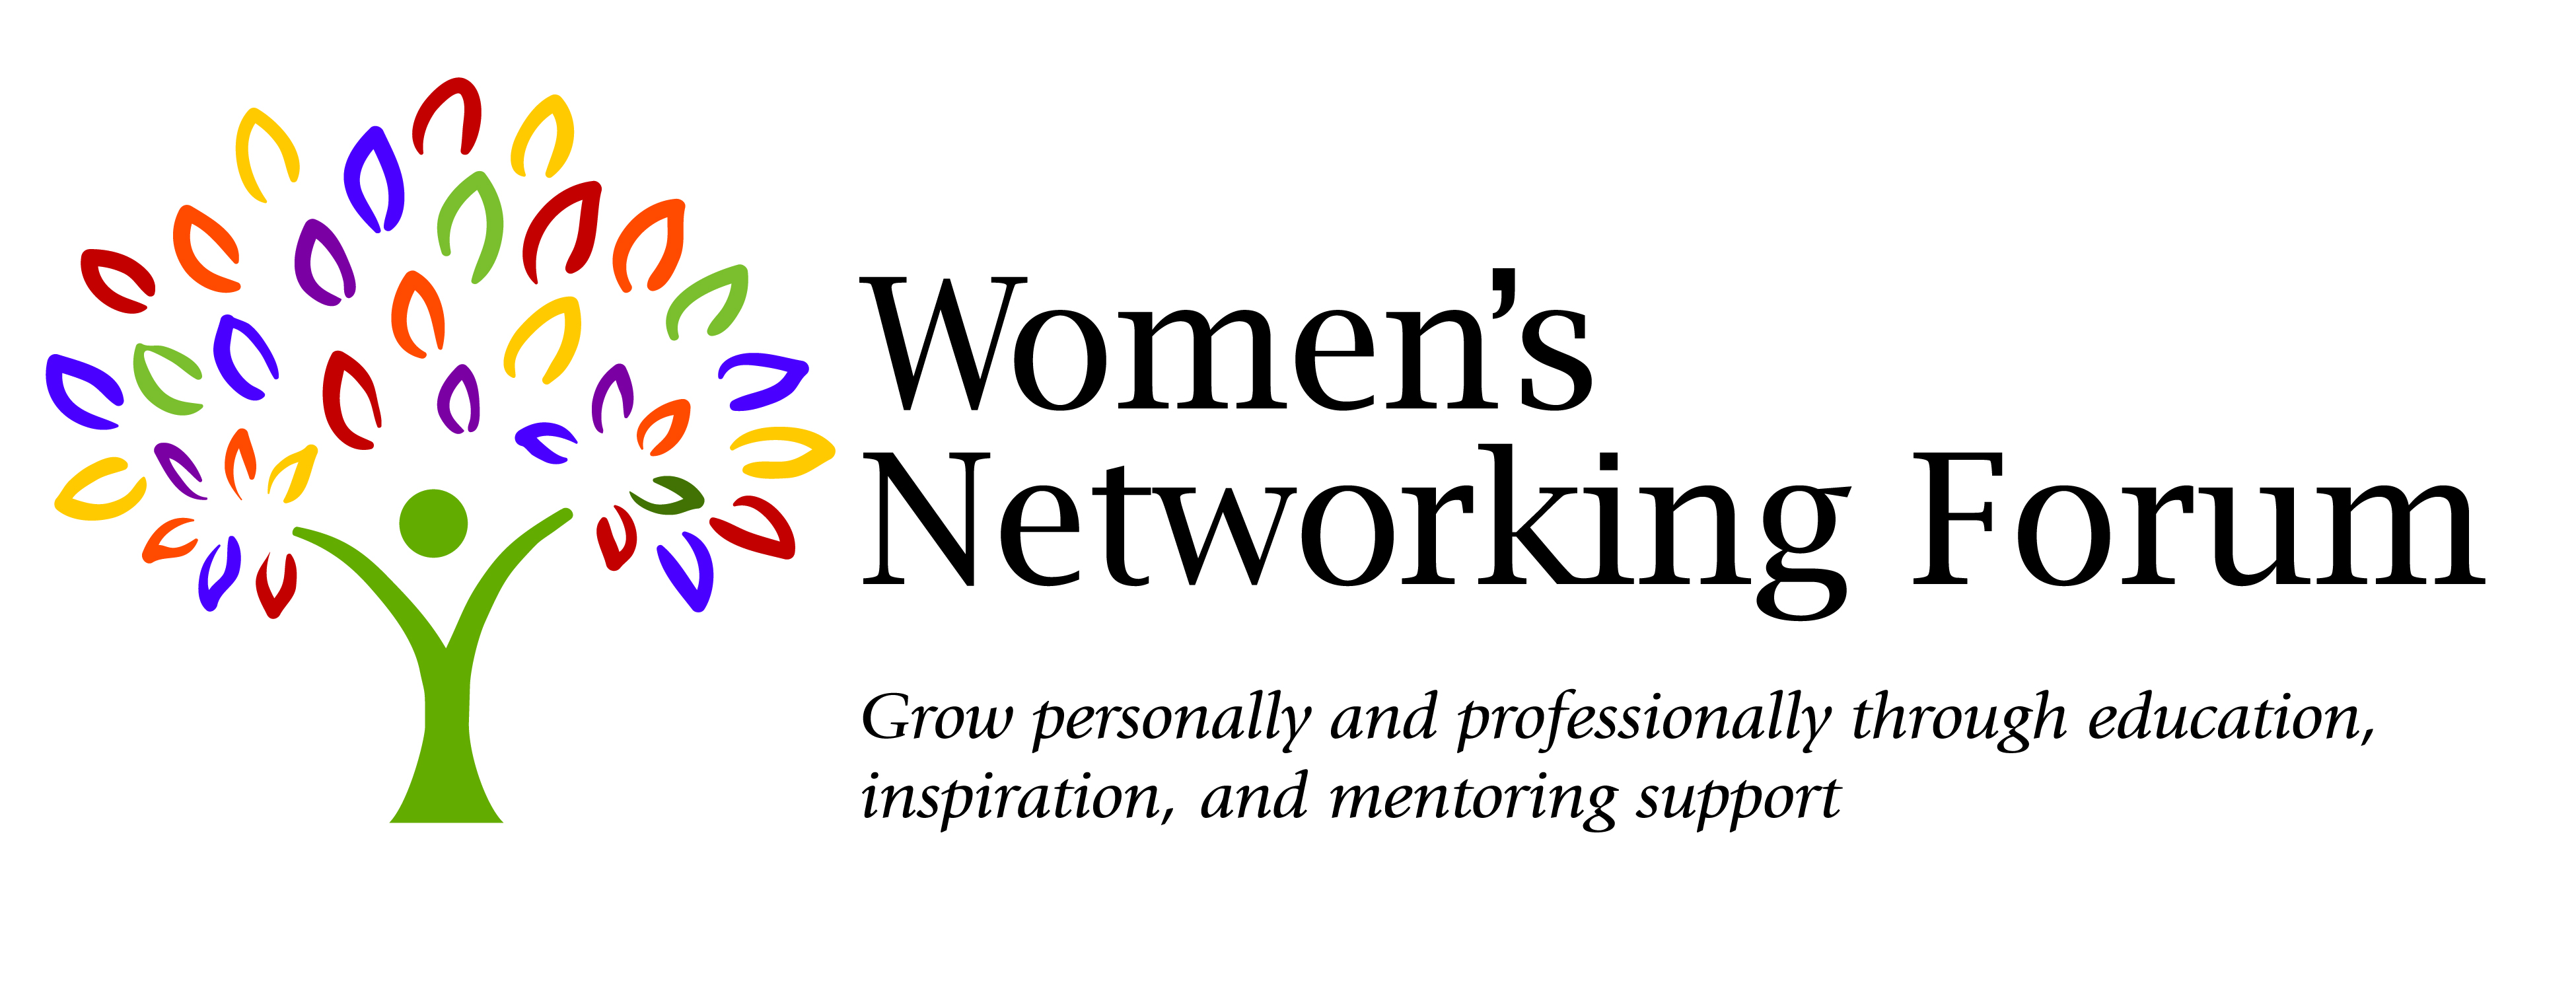 Women S Networking Forum Effective Networking Strategies For Women June 7 2012 Southern